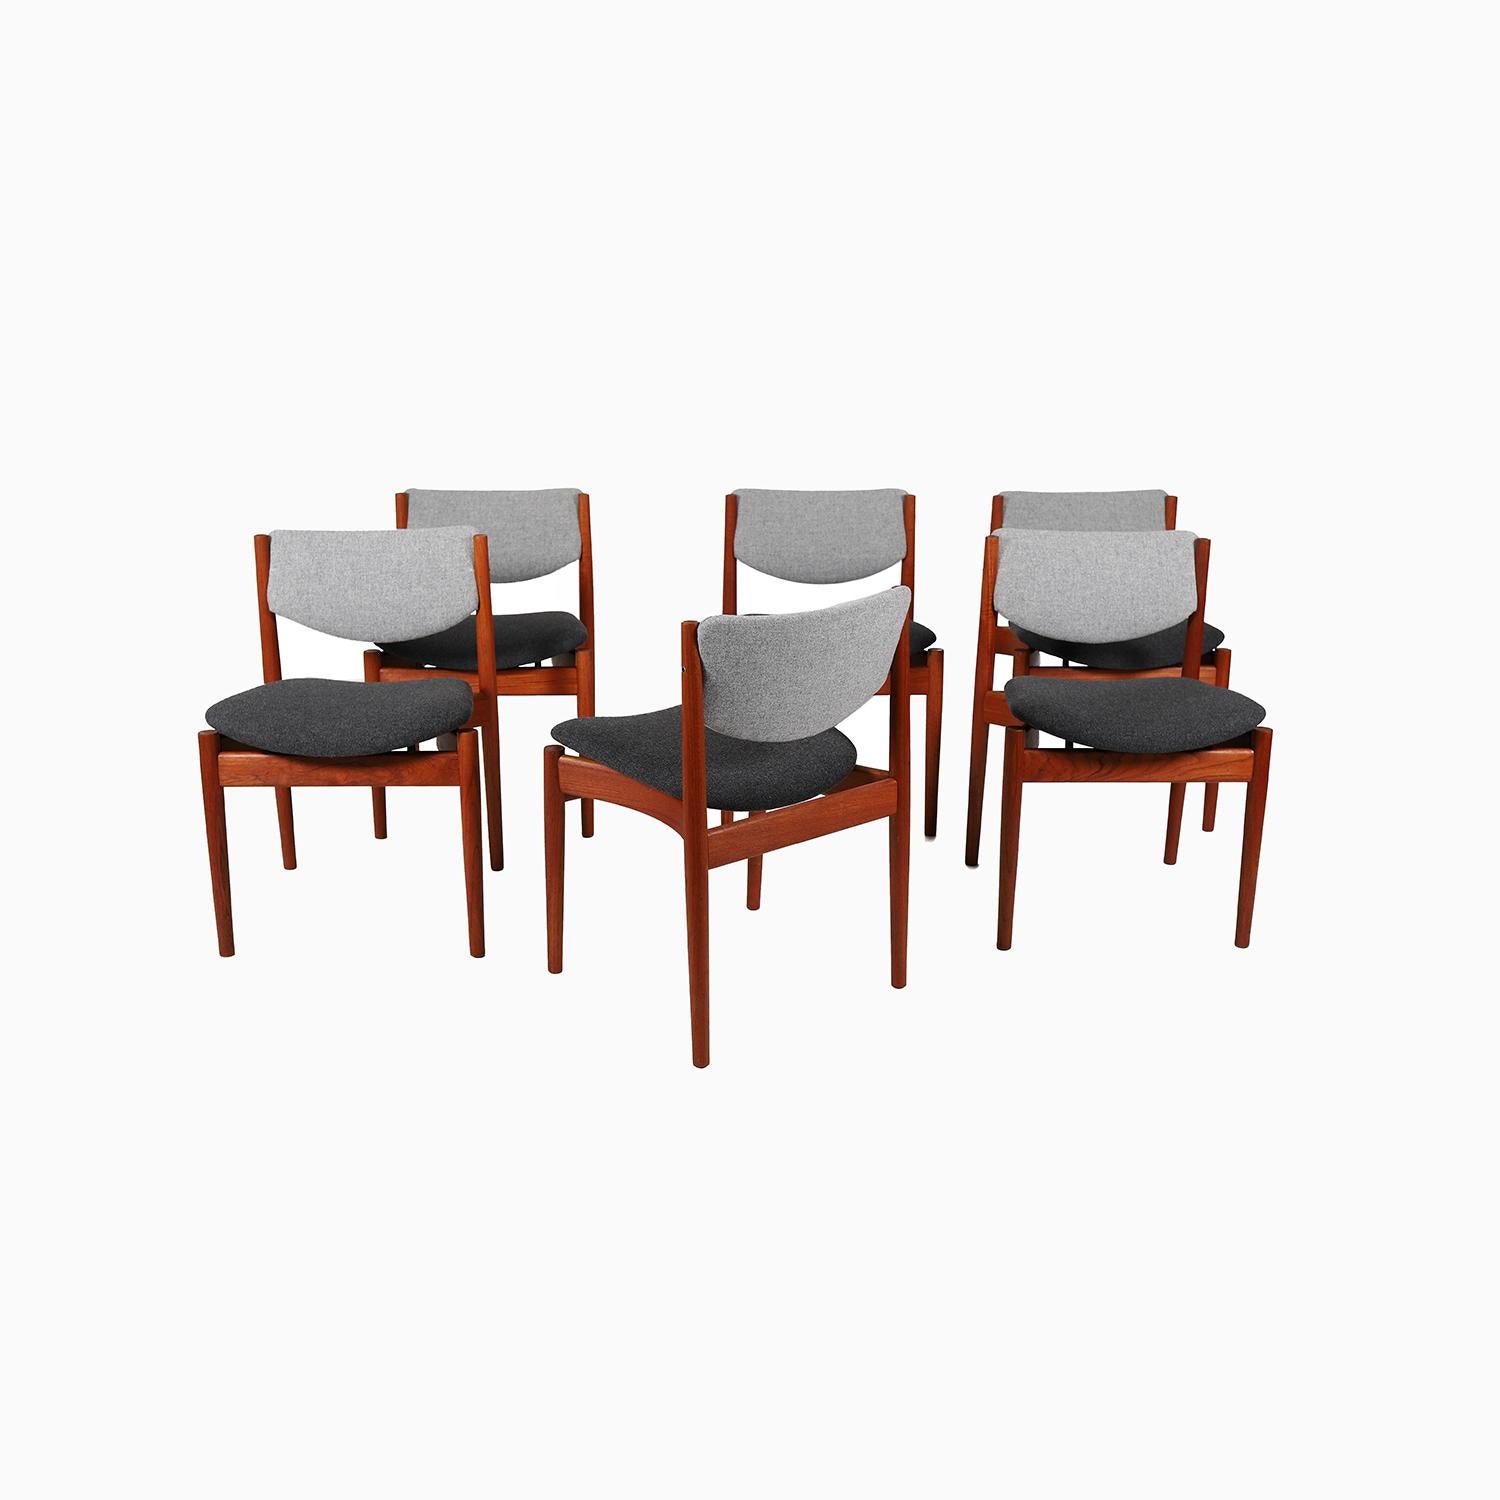 Oiled Danish Modern Teak Dining Chairs by Finn Juhl